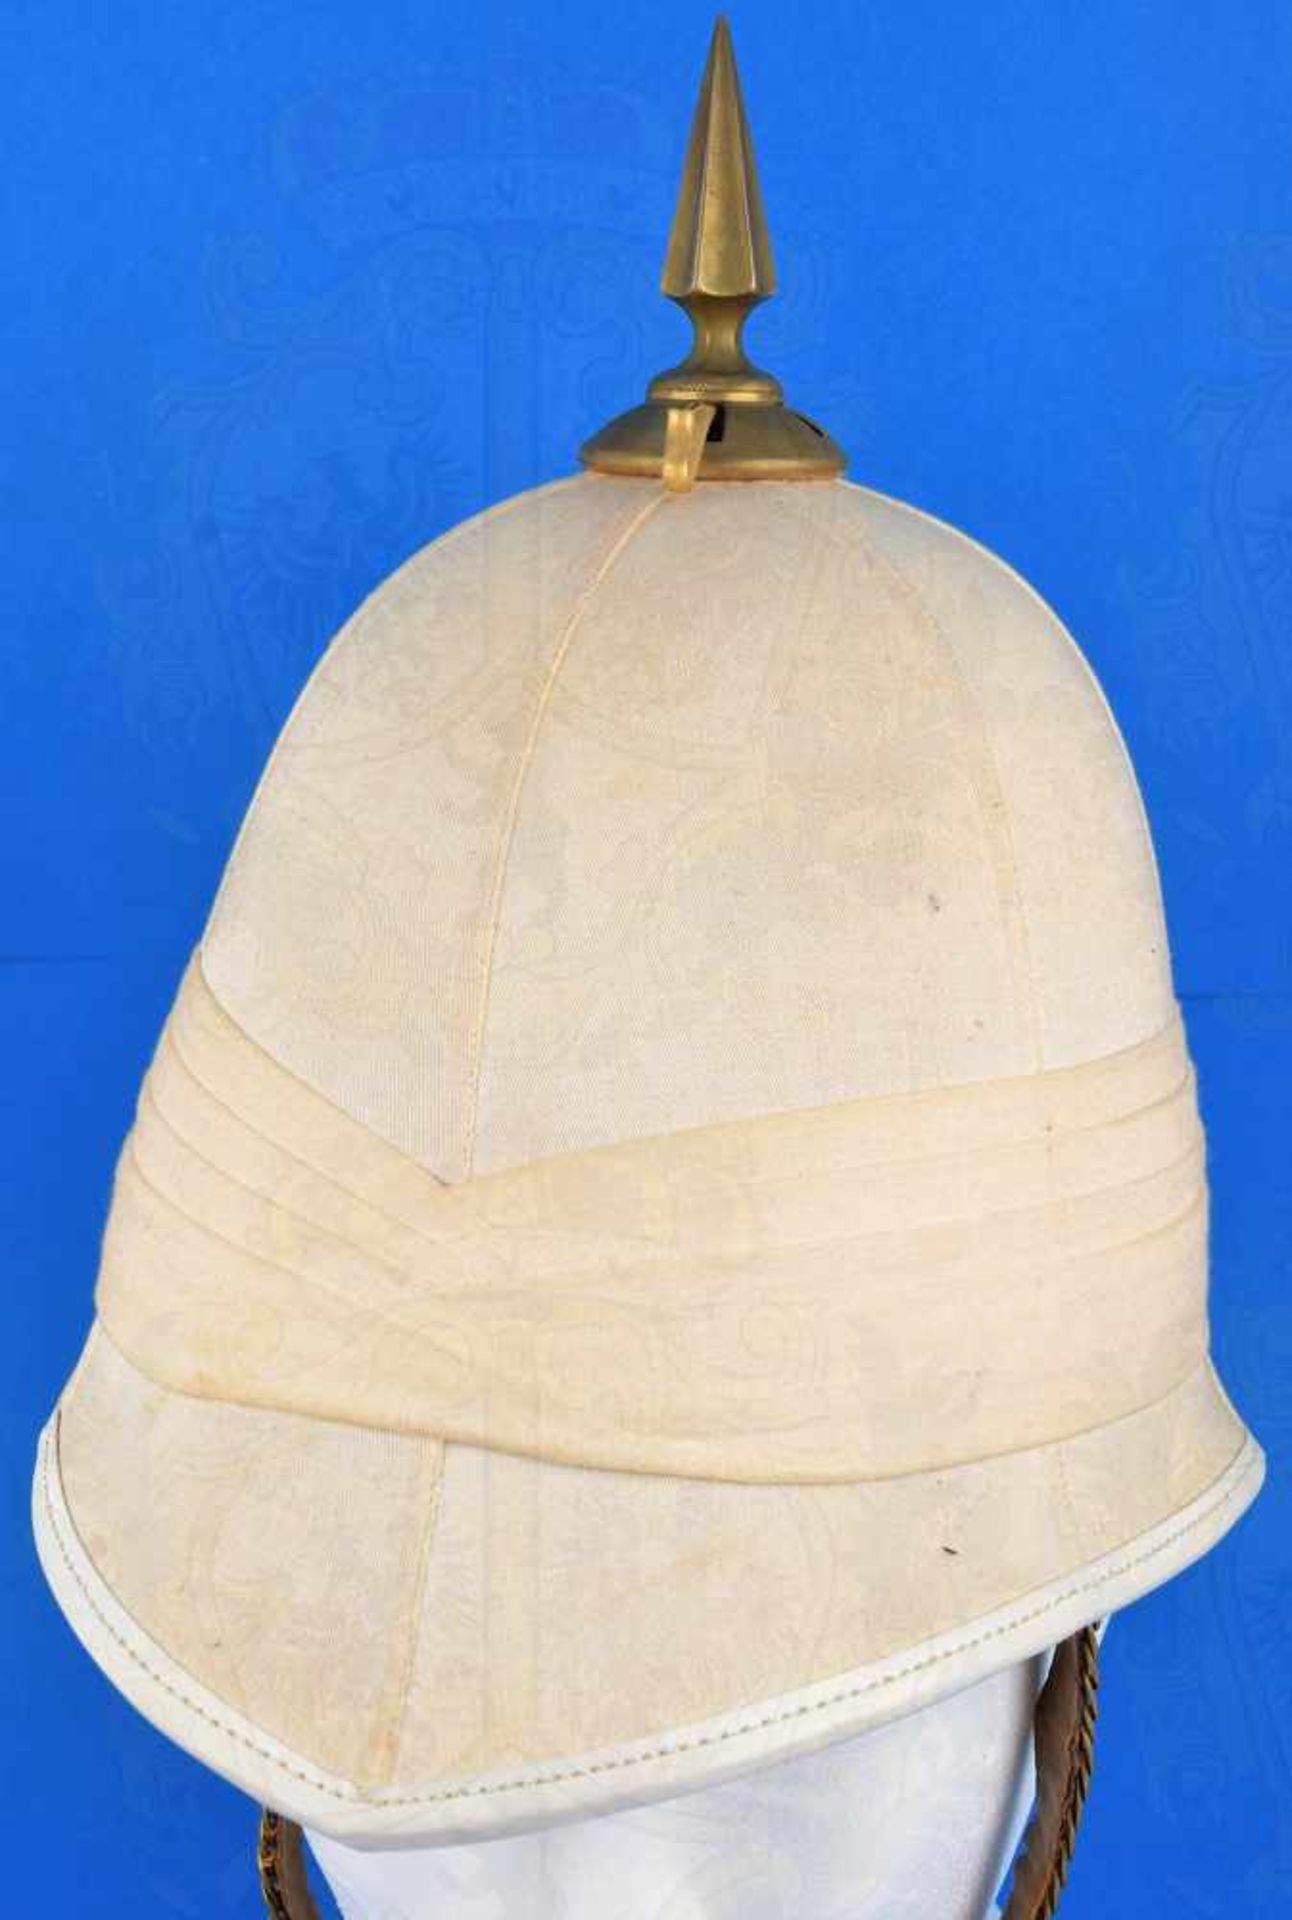 TROPENHELM, ältere Form m. Spitze, bez. „Waterproof Tropical Helmet Made in England“, weißer